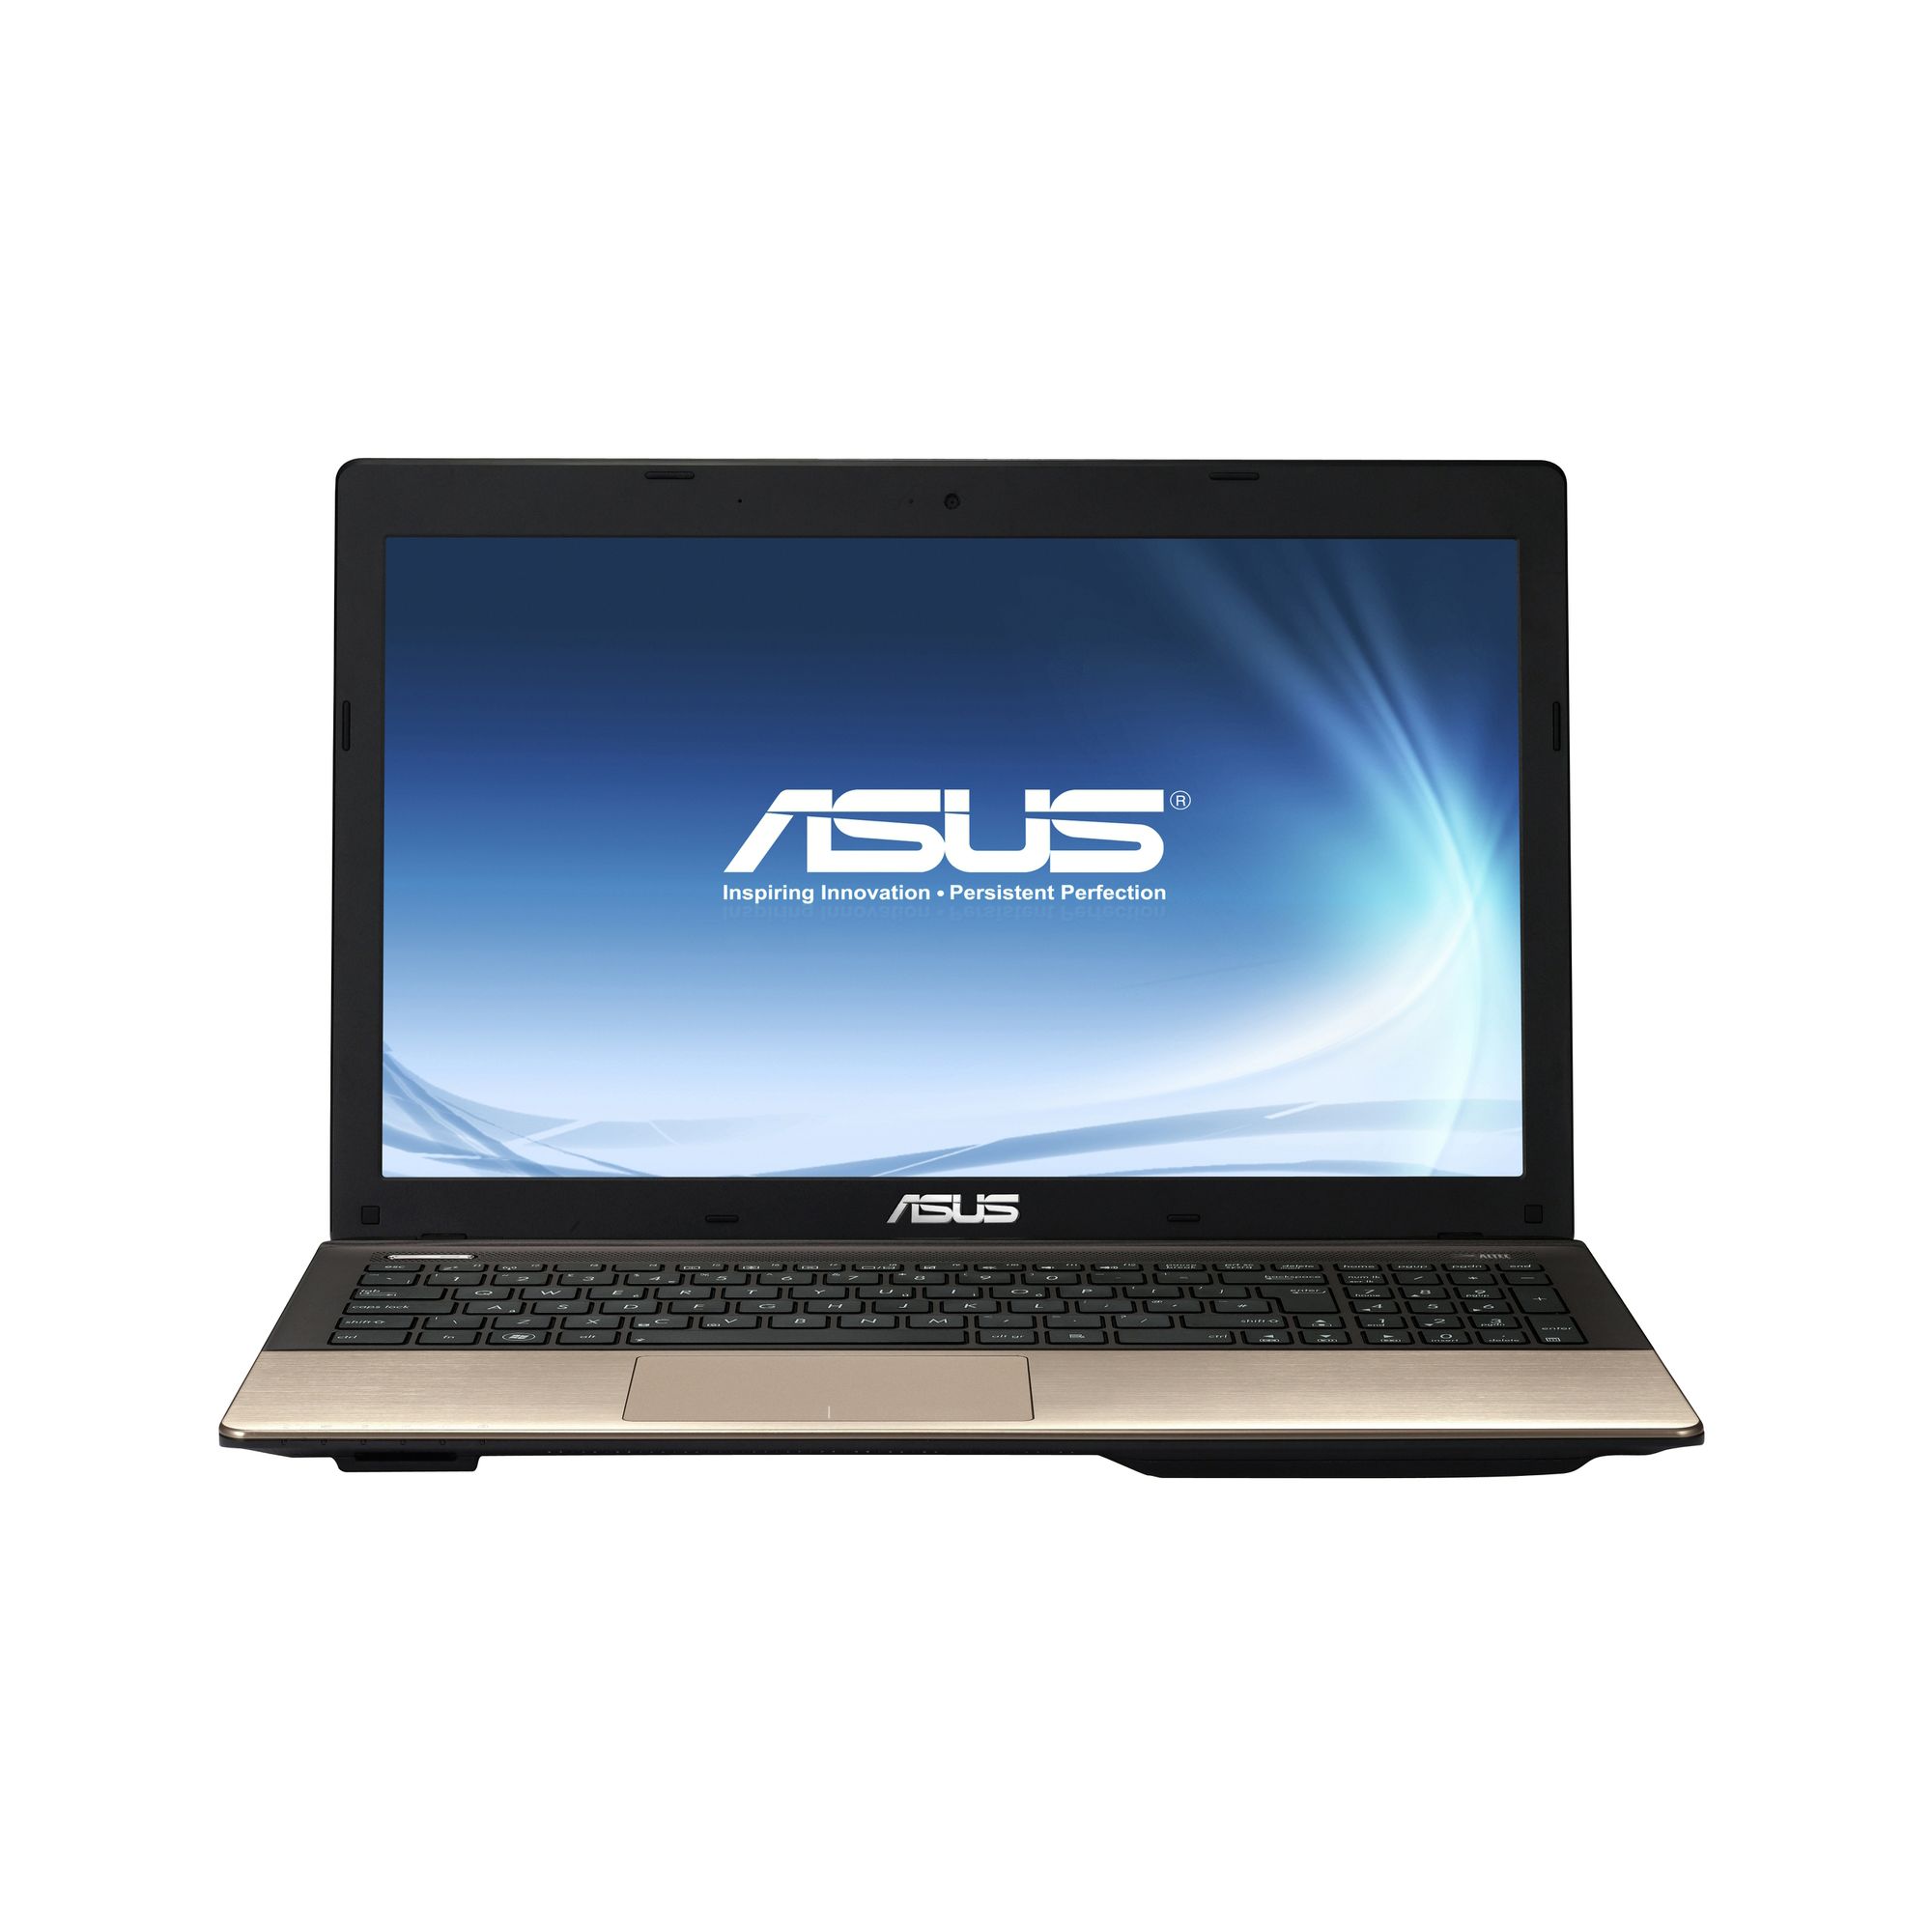 Asus K55A-SX364H (15.6 inch) Notebook PC Celeron (B820) 4GB 320GB DVD-SM Gigabit LAN Webcam Windows 8 HP (Intergrated Intel HD 4000 Graphics)